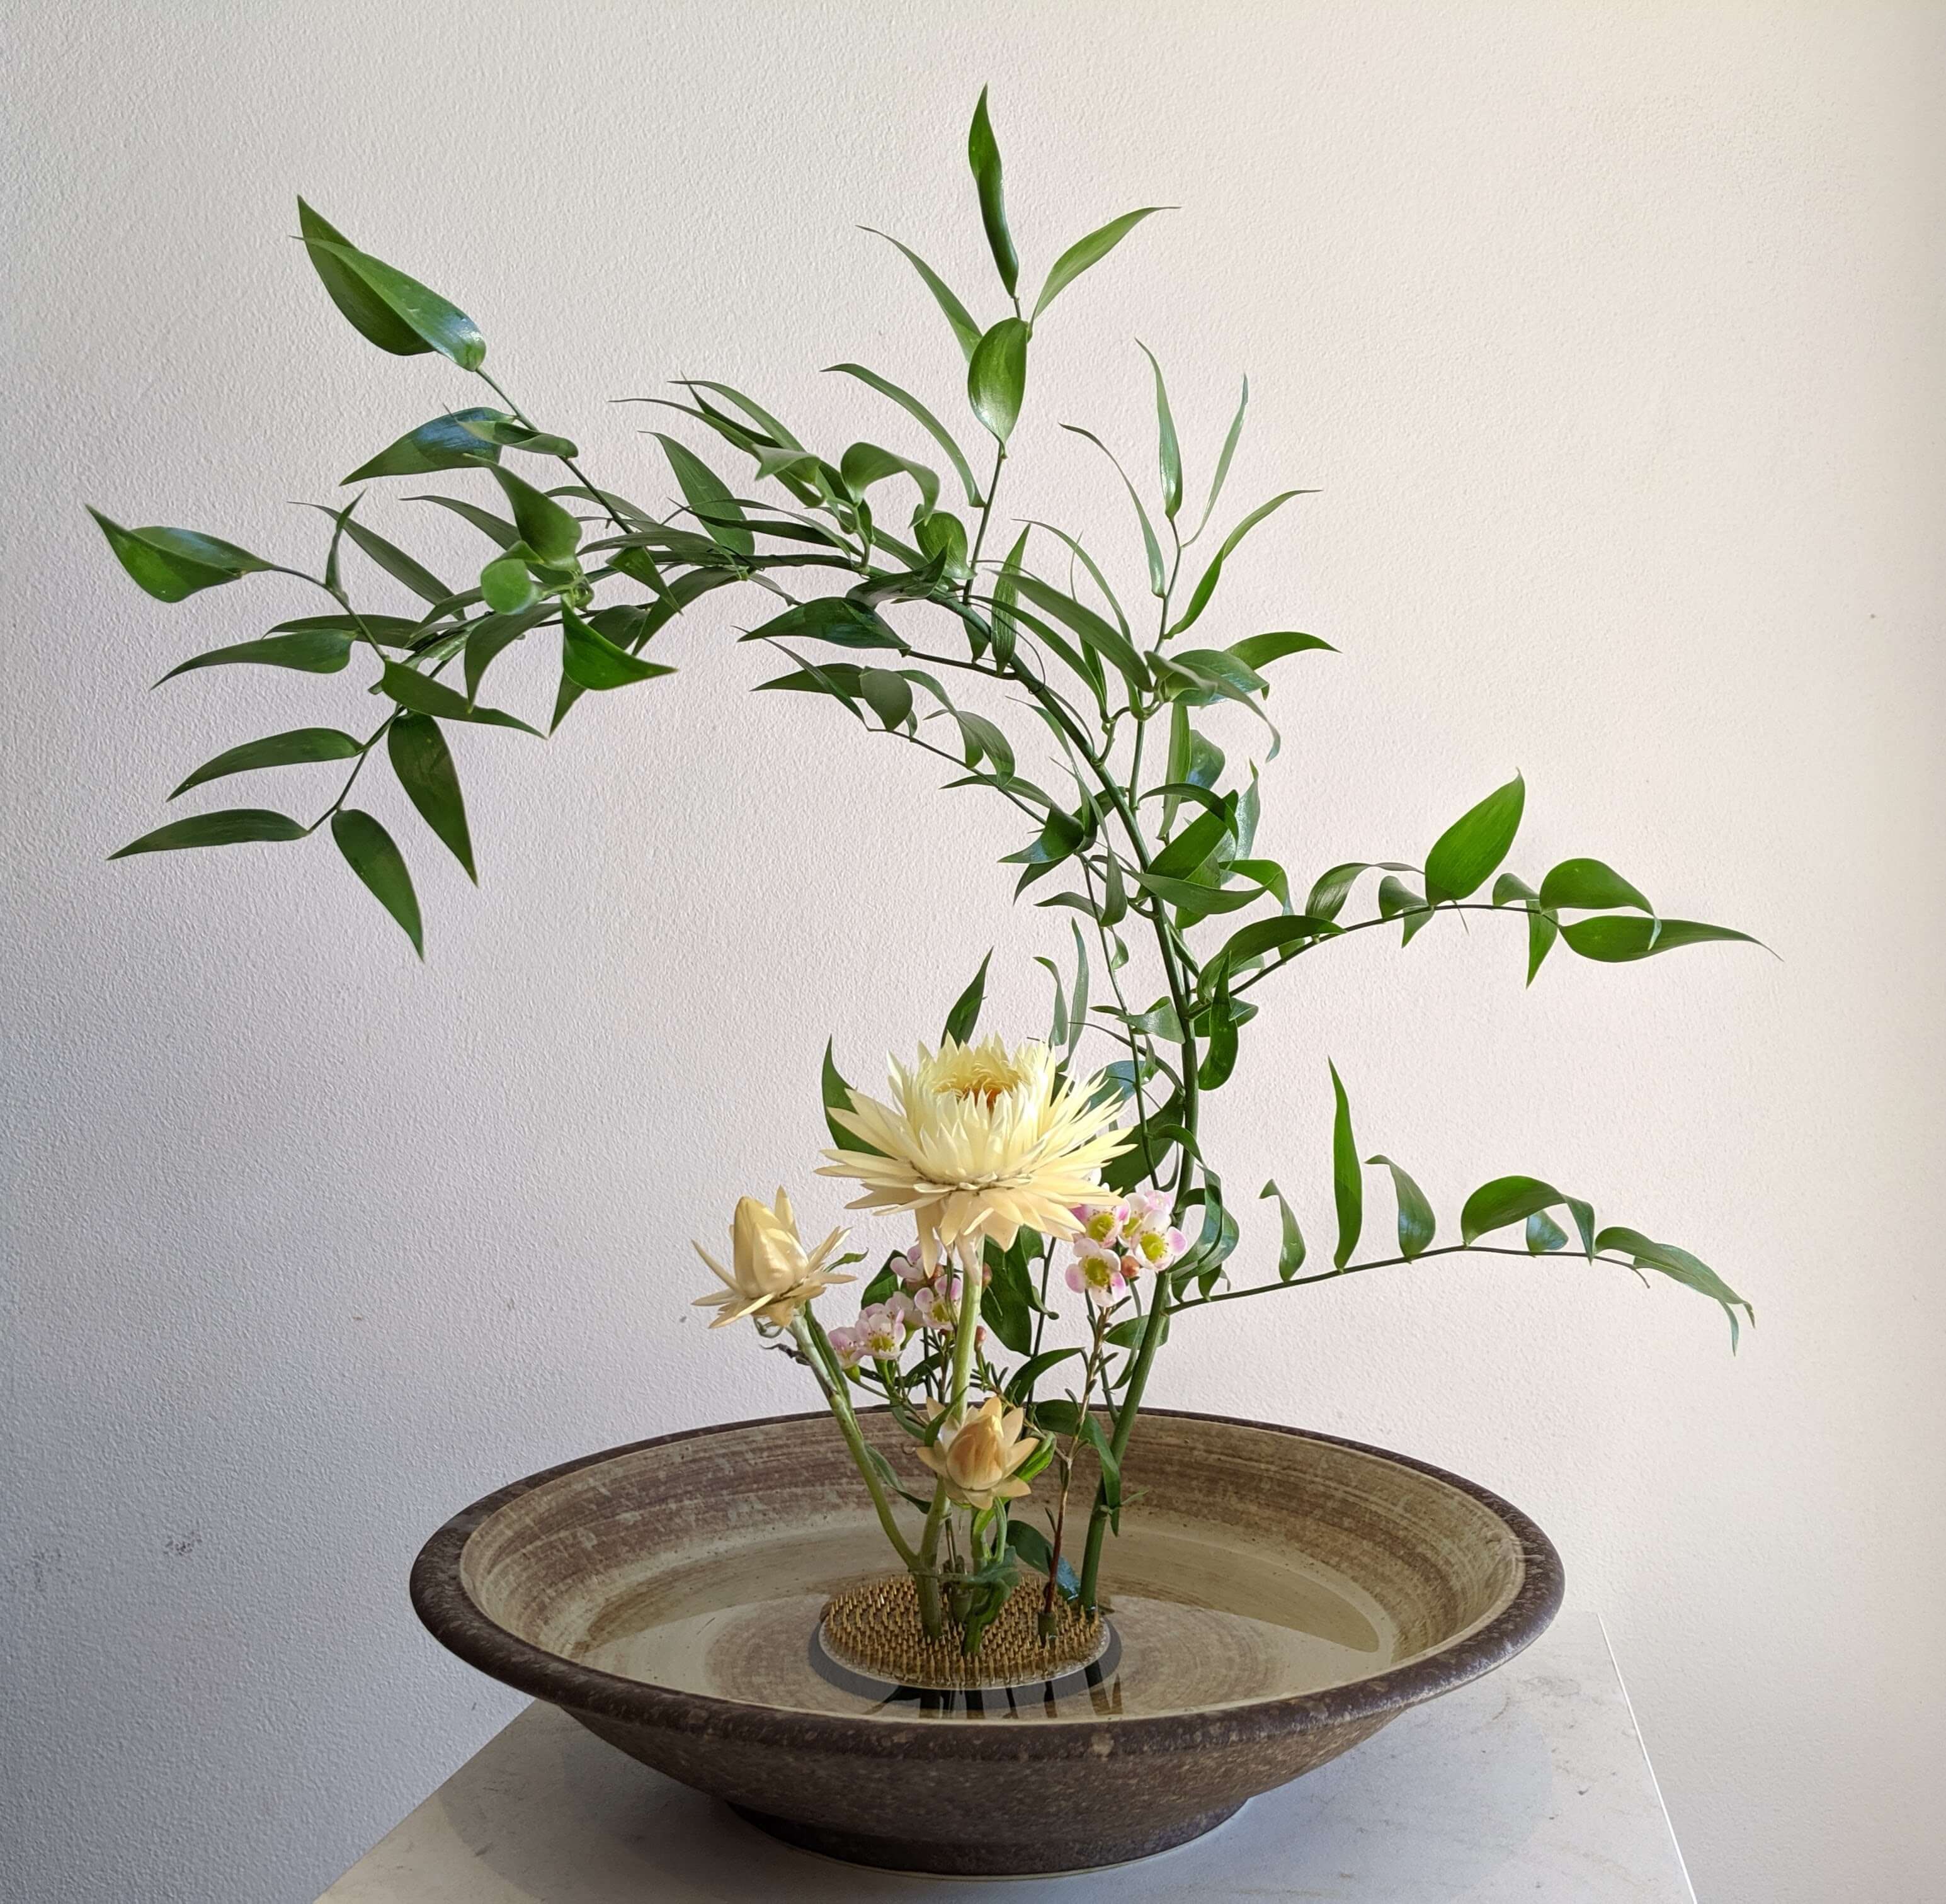 - the Japanese flower arrangement